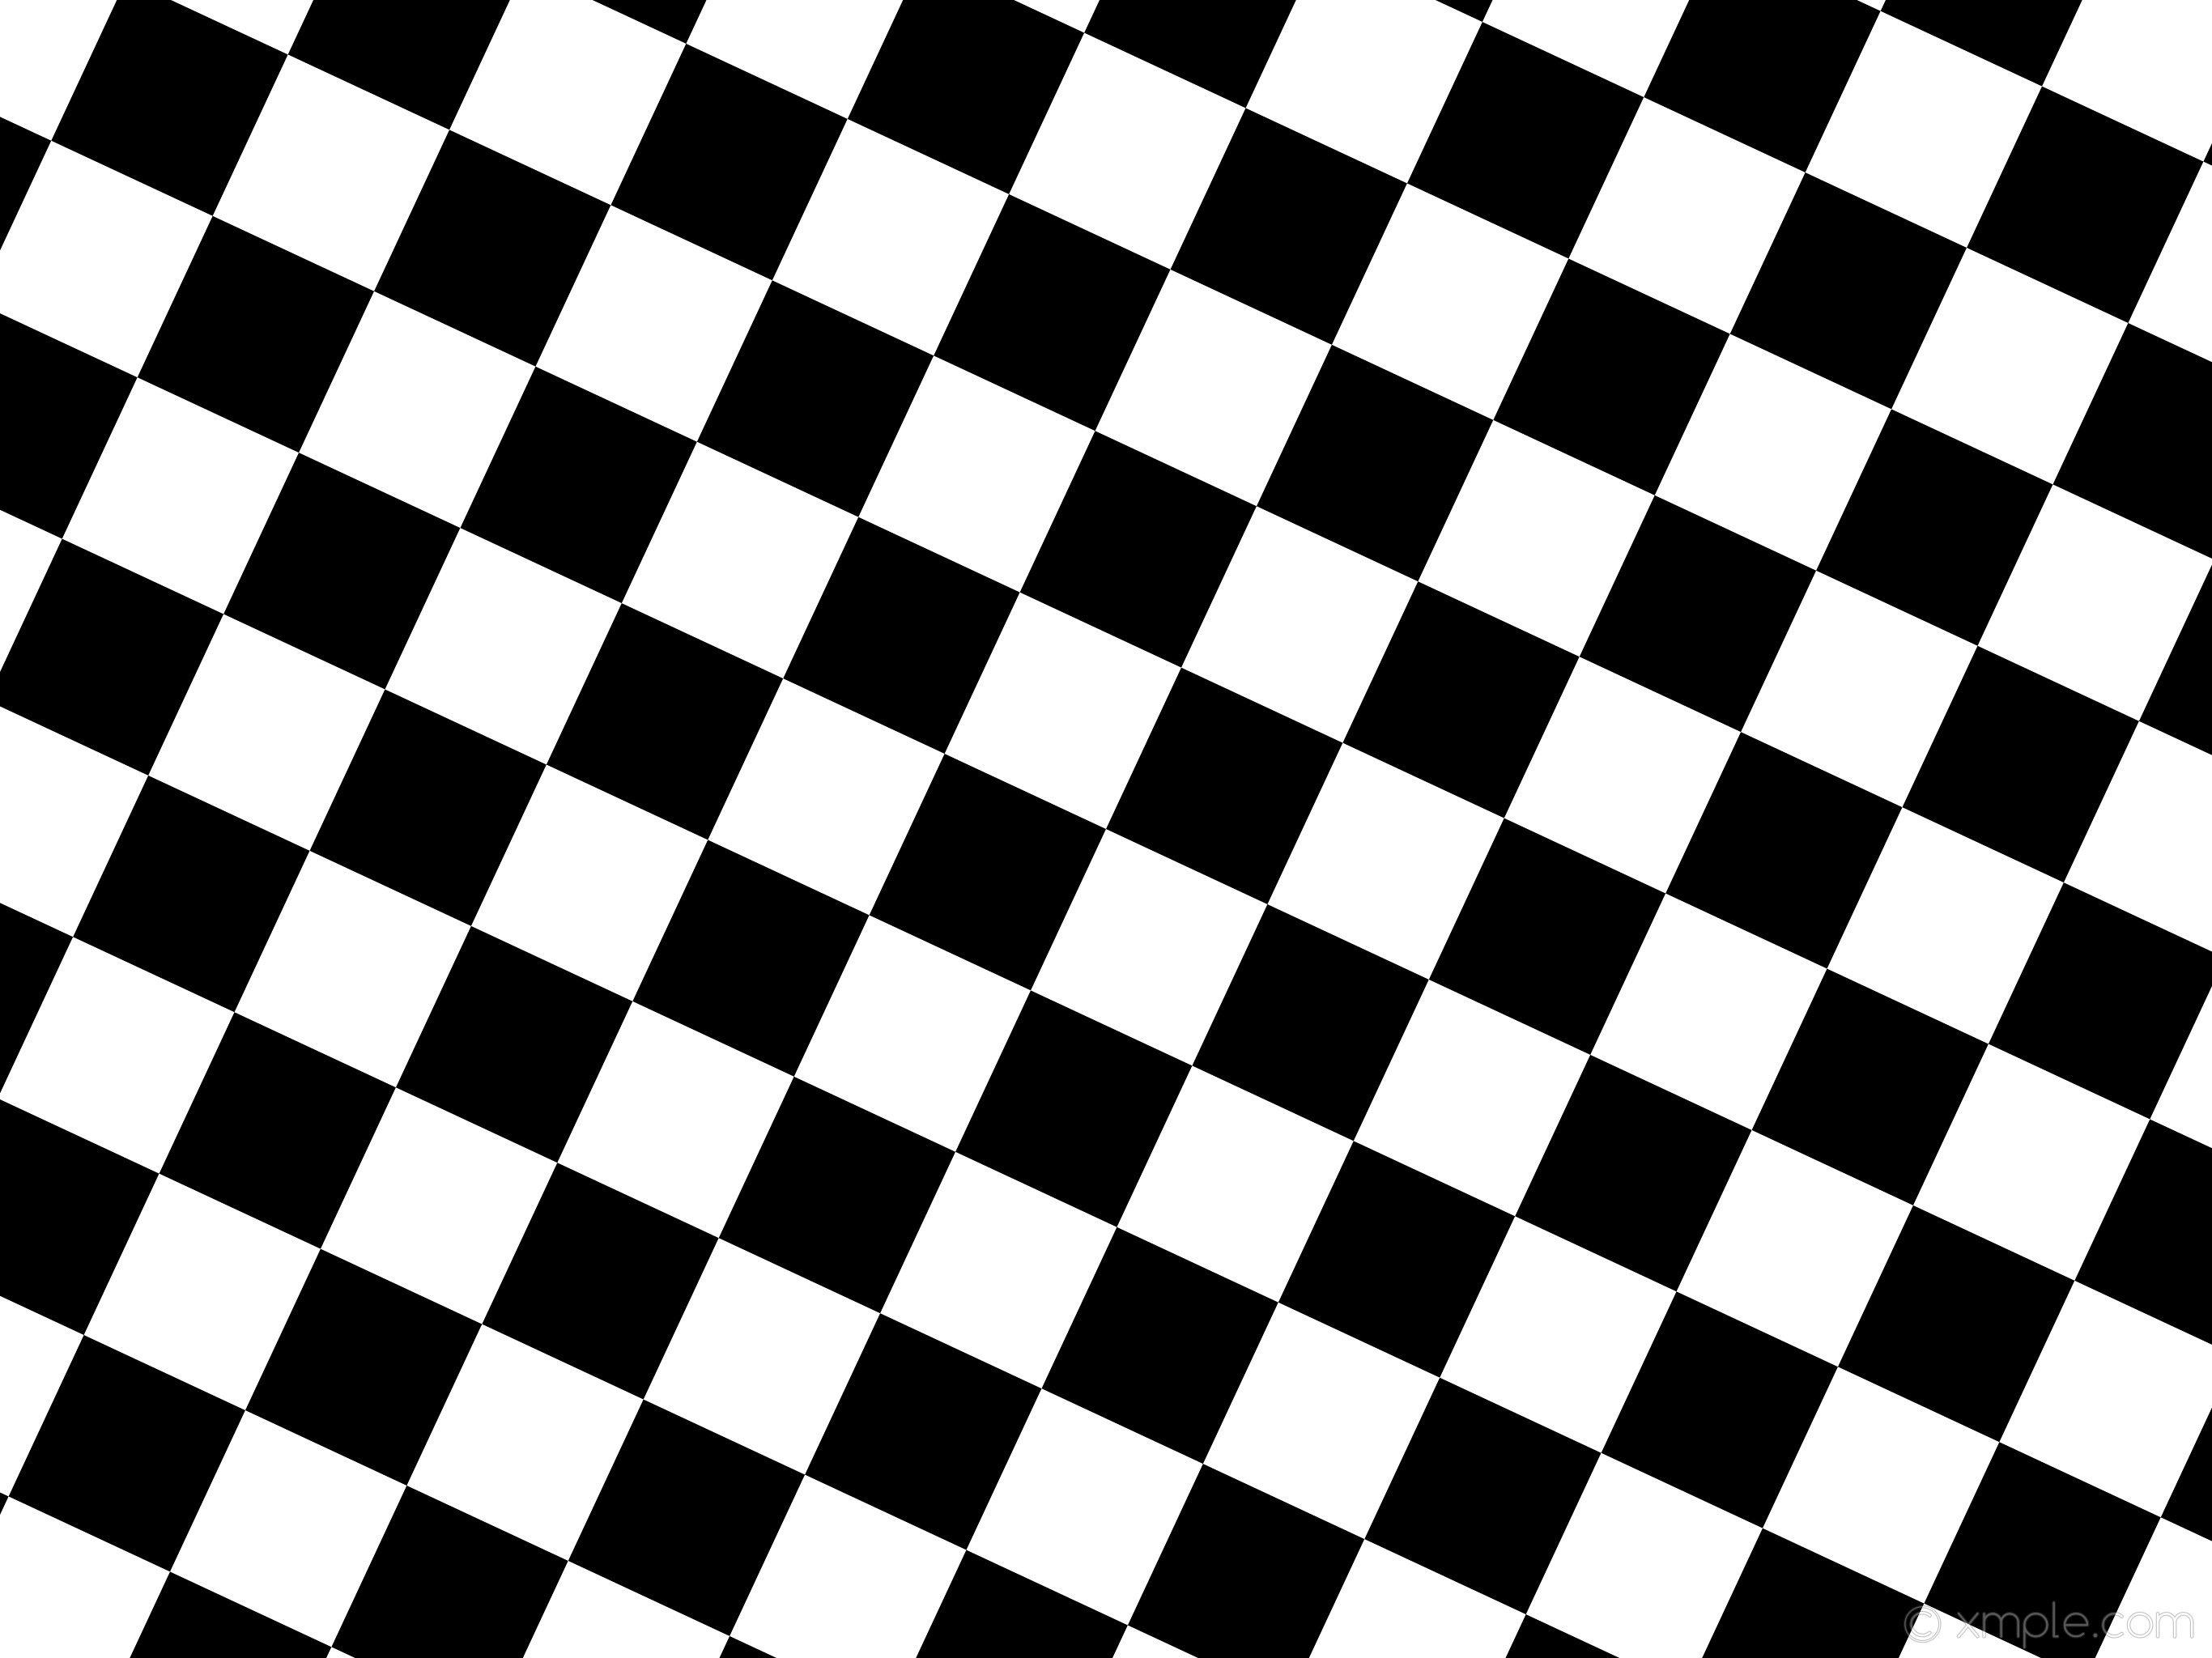 Black and White Checkered Wallpaper